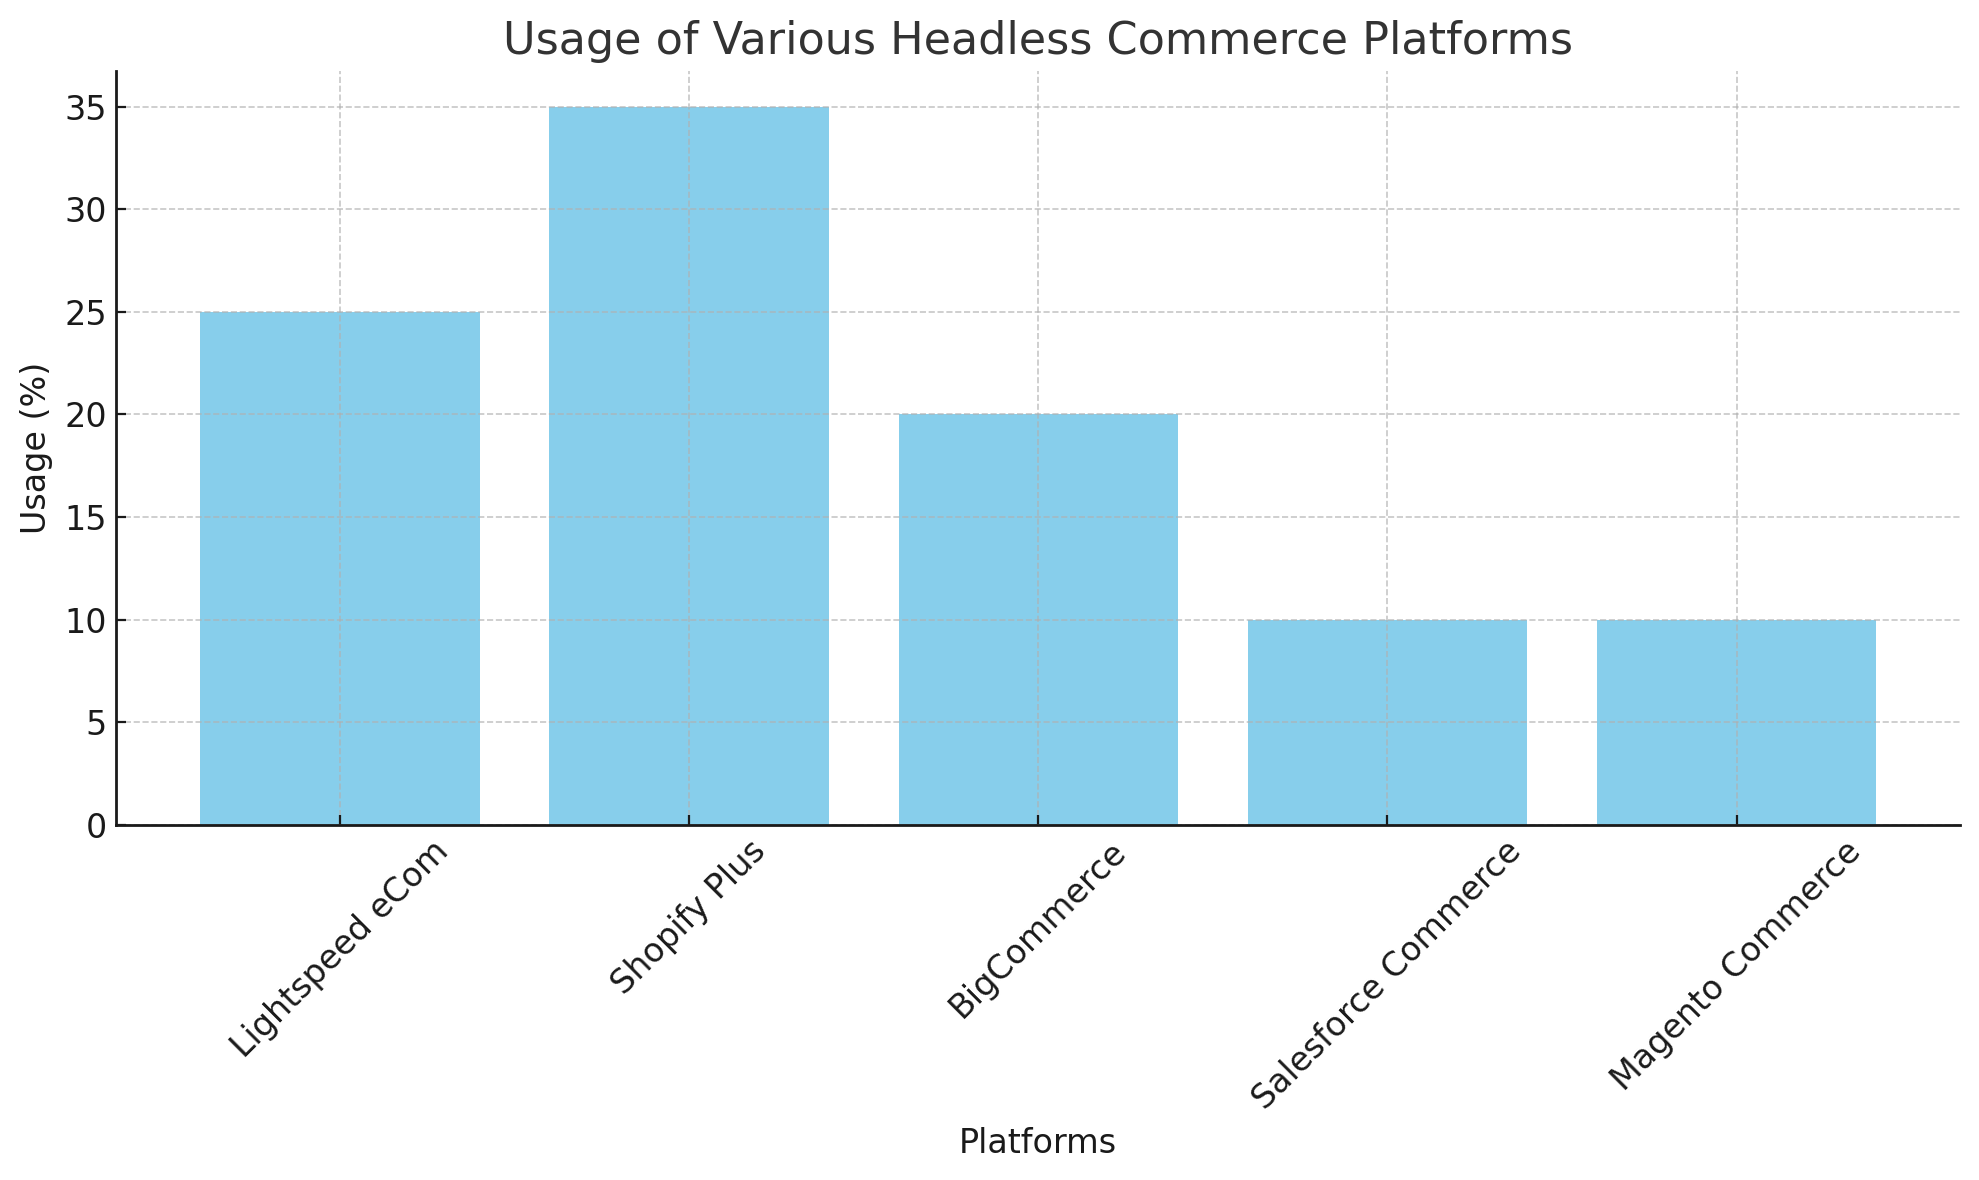 Usage Distribution of Various Headless Commerce Platforms